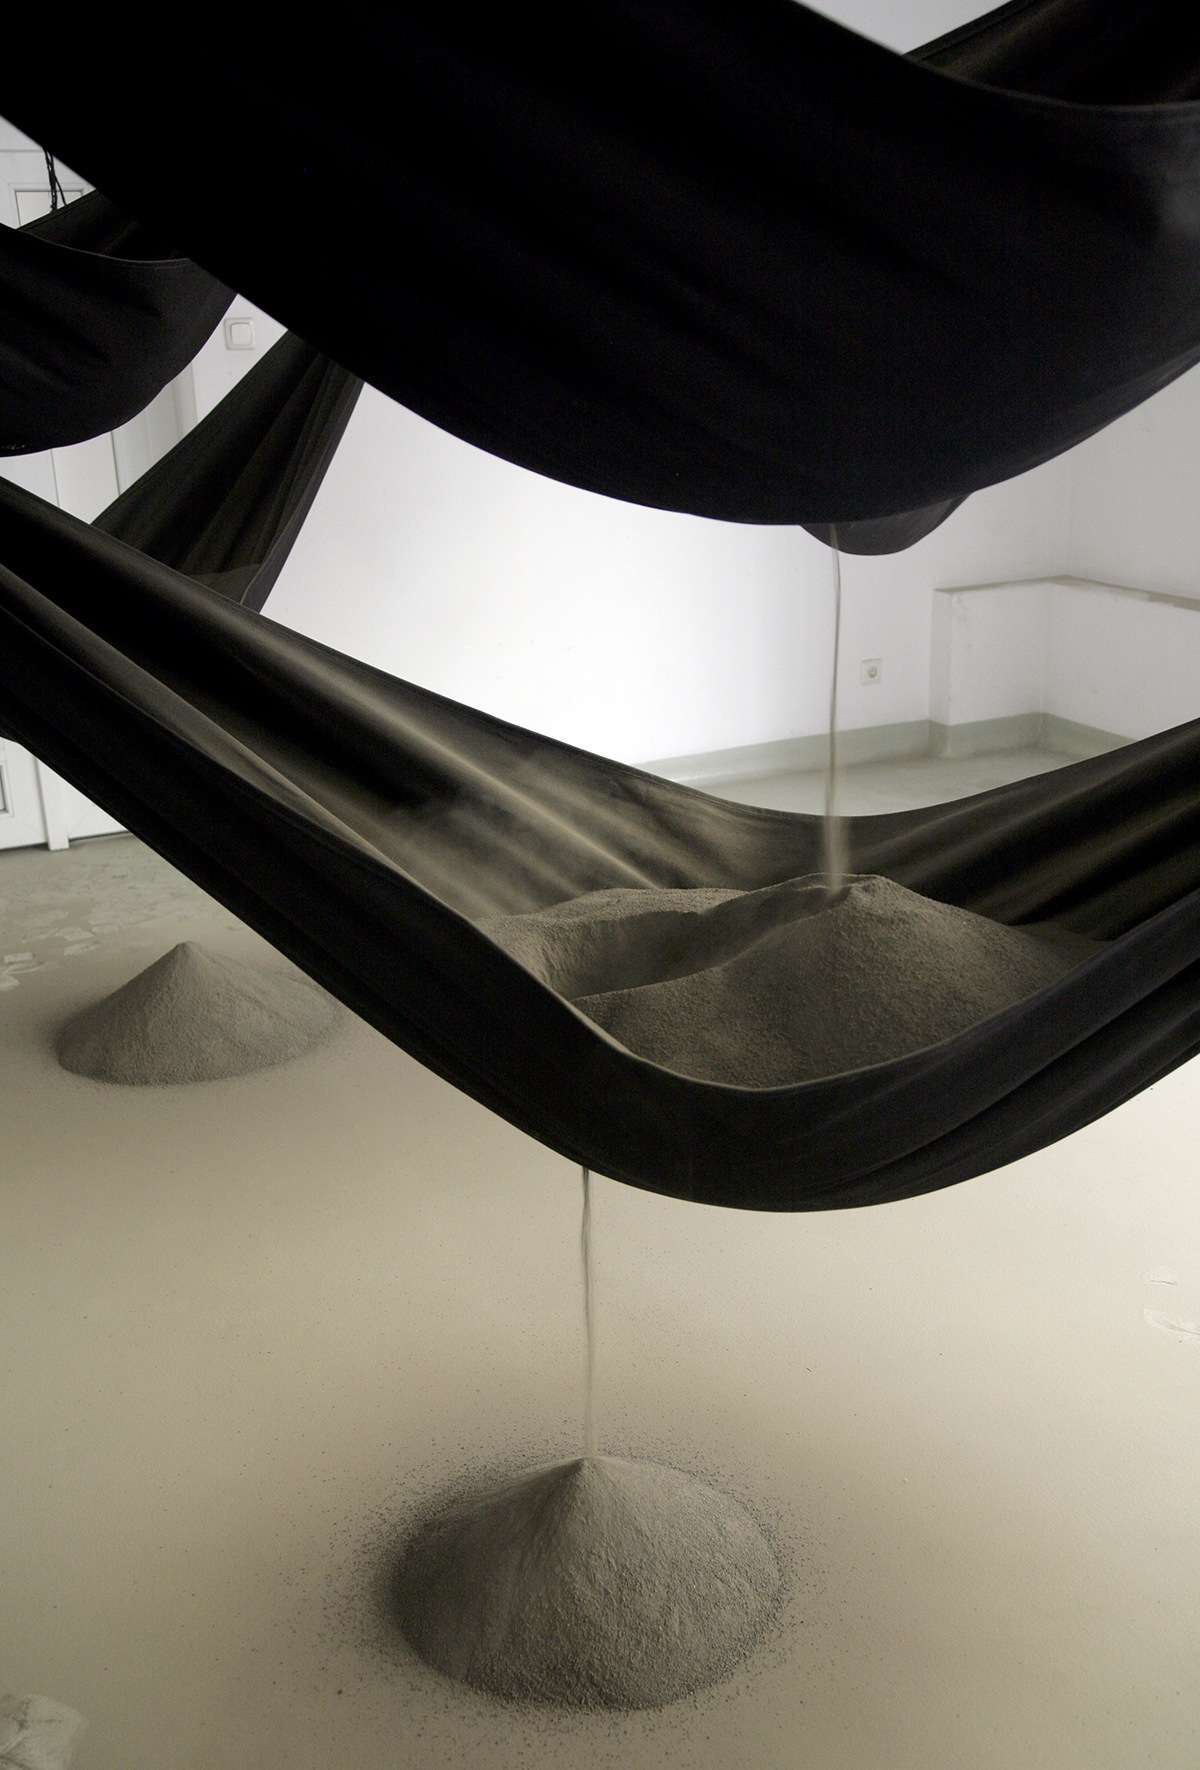 Maria Dmitruk, "Ubi sunt", 2013, instalacja